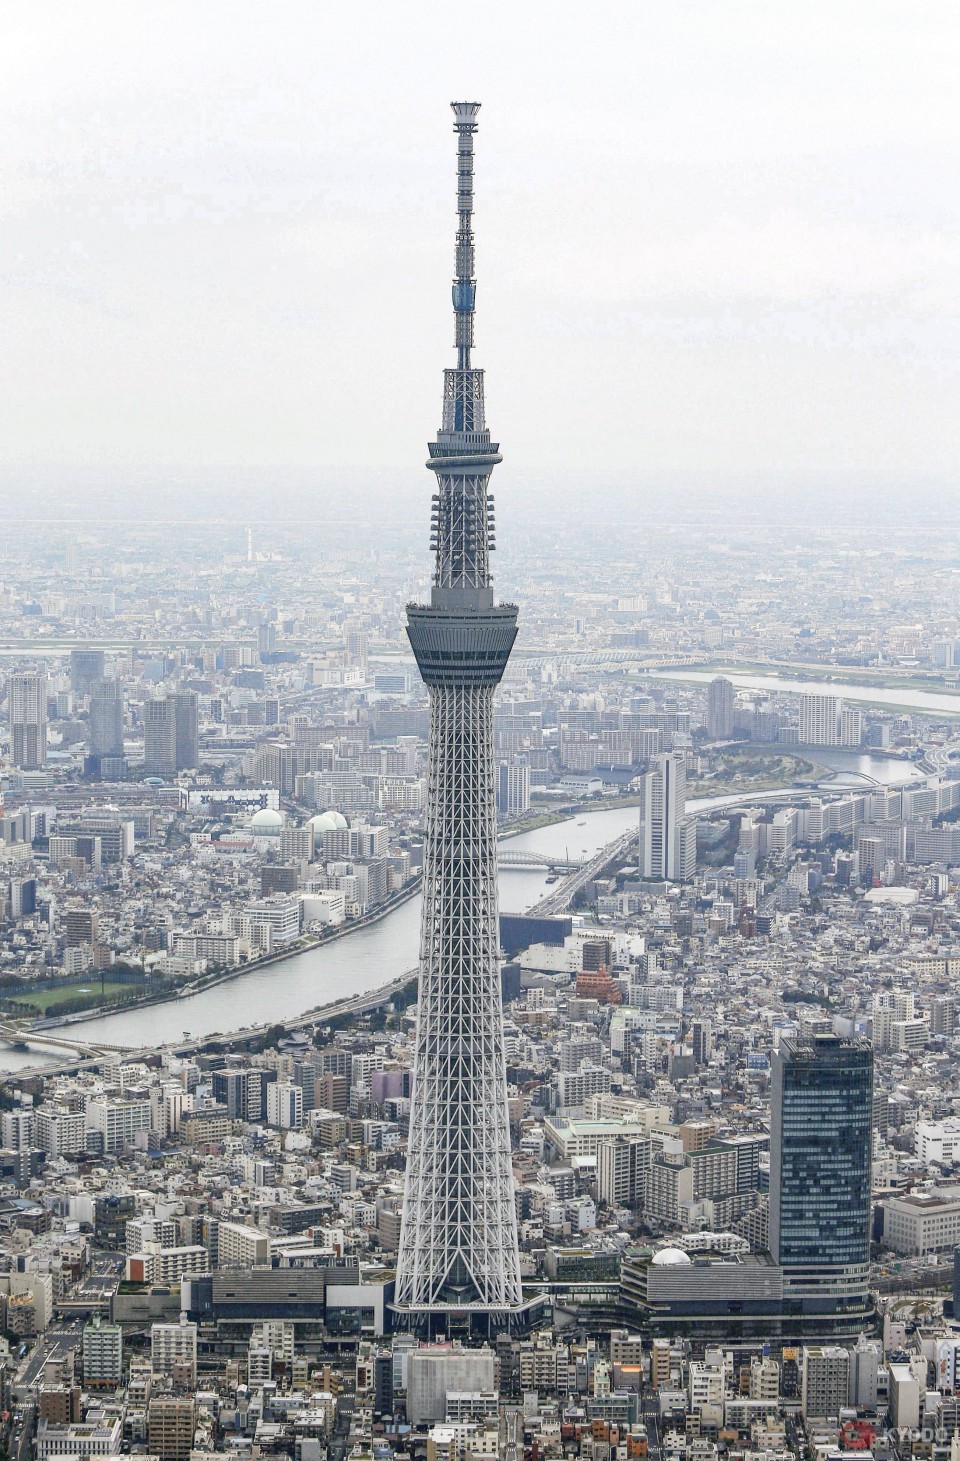 Tokyo skytree 10th anniversary